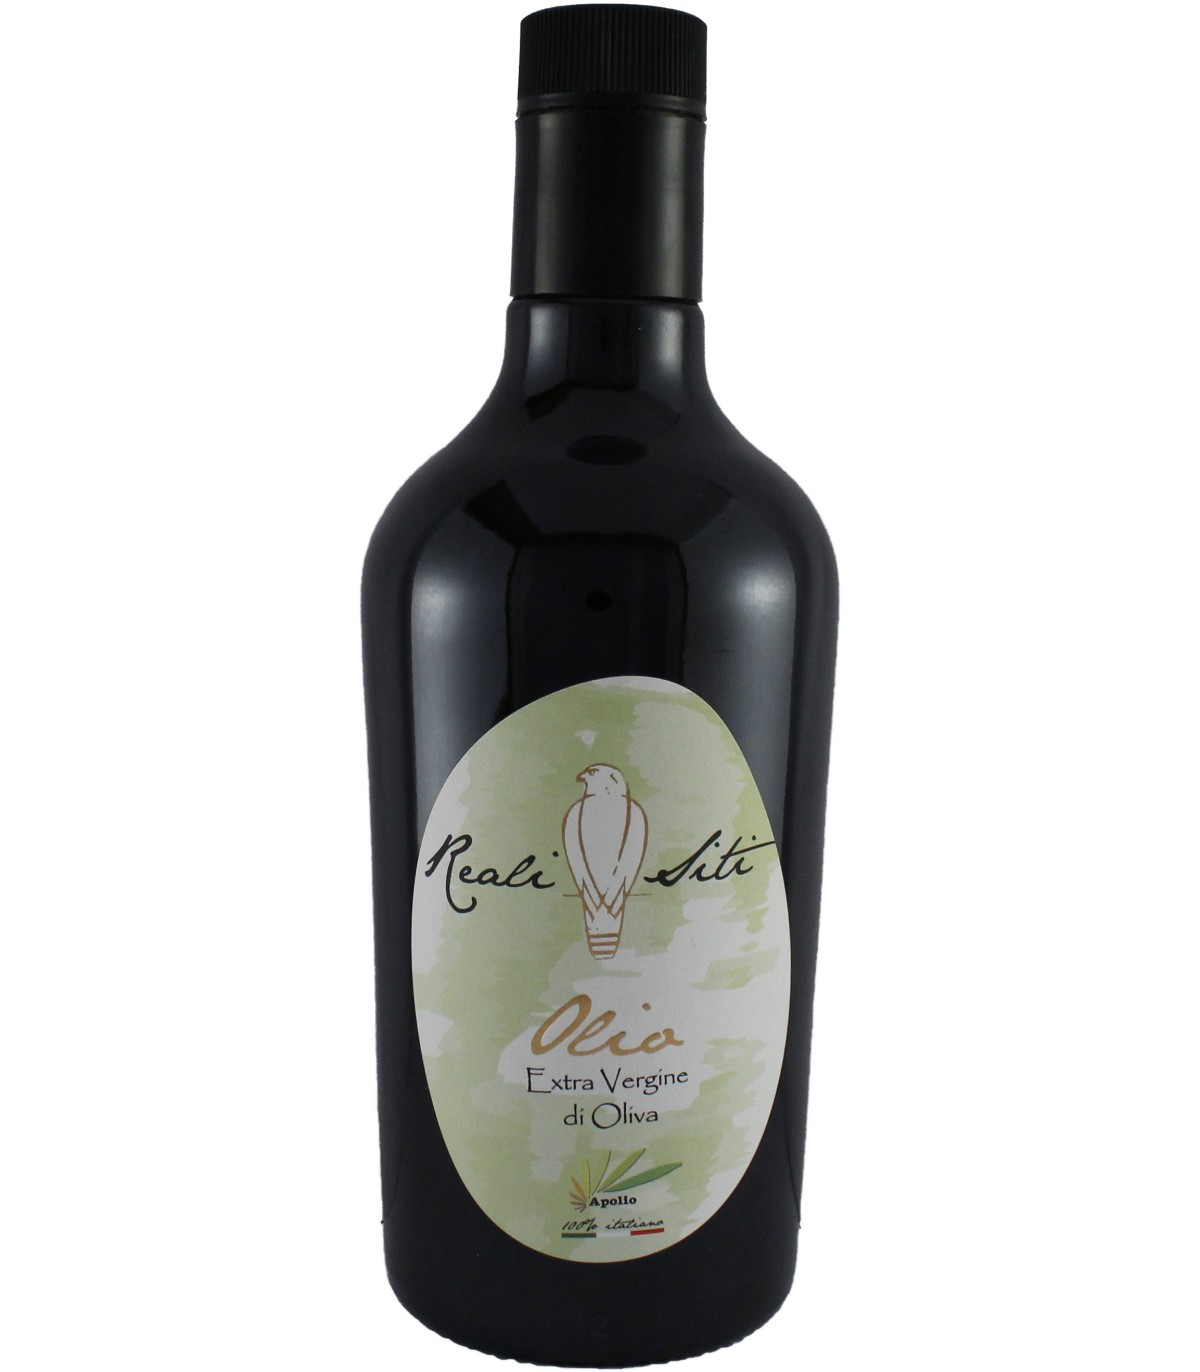 Bott. 0.250 ml "5 Royal Sites" extra Virgin olive Oil Apolio